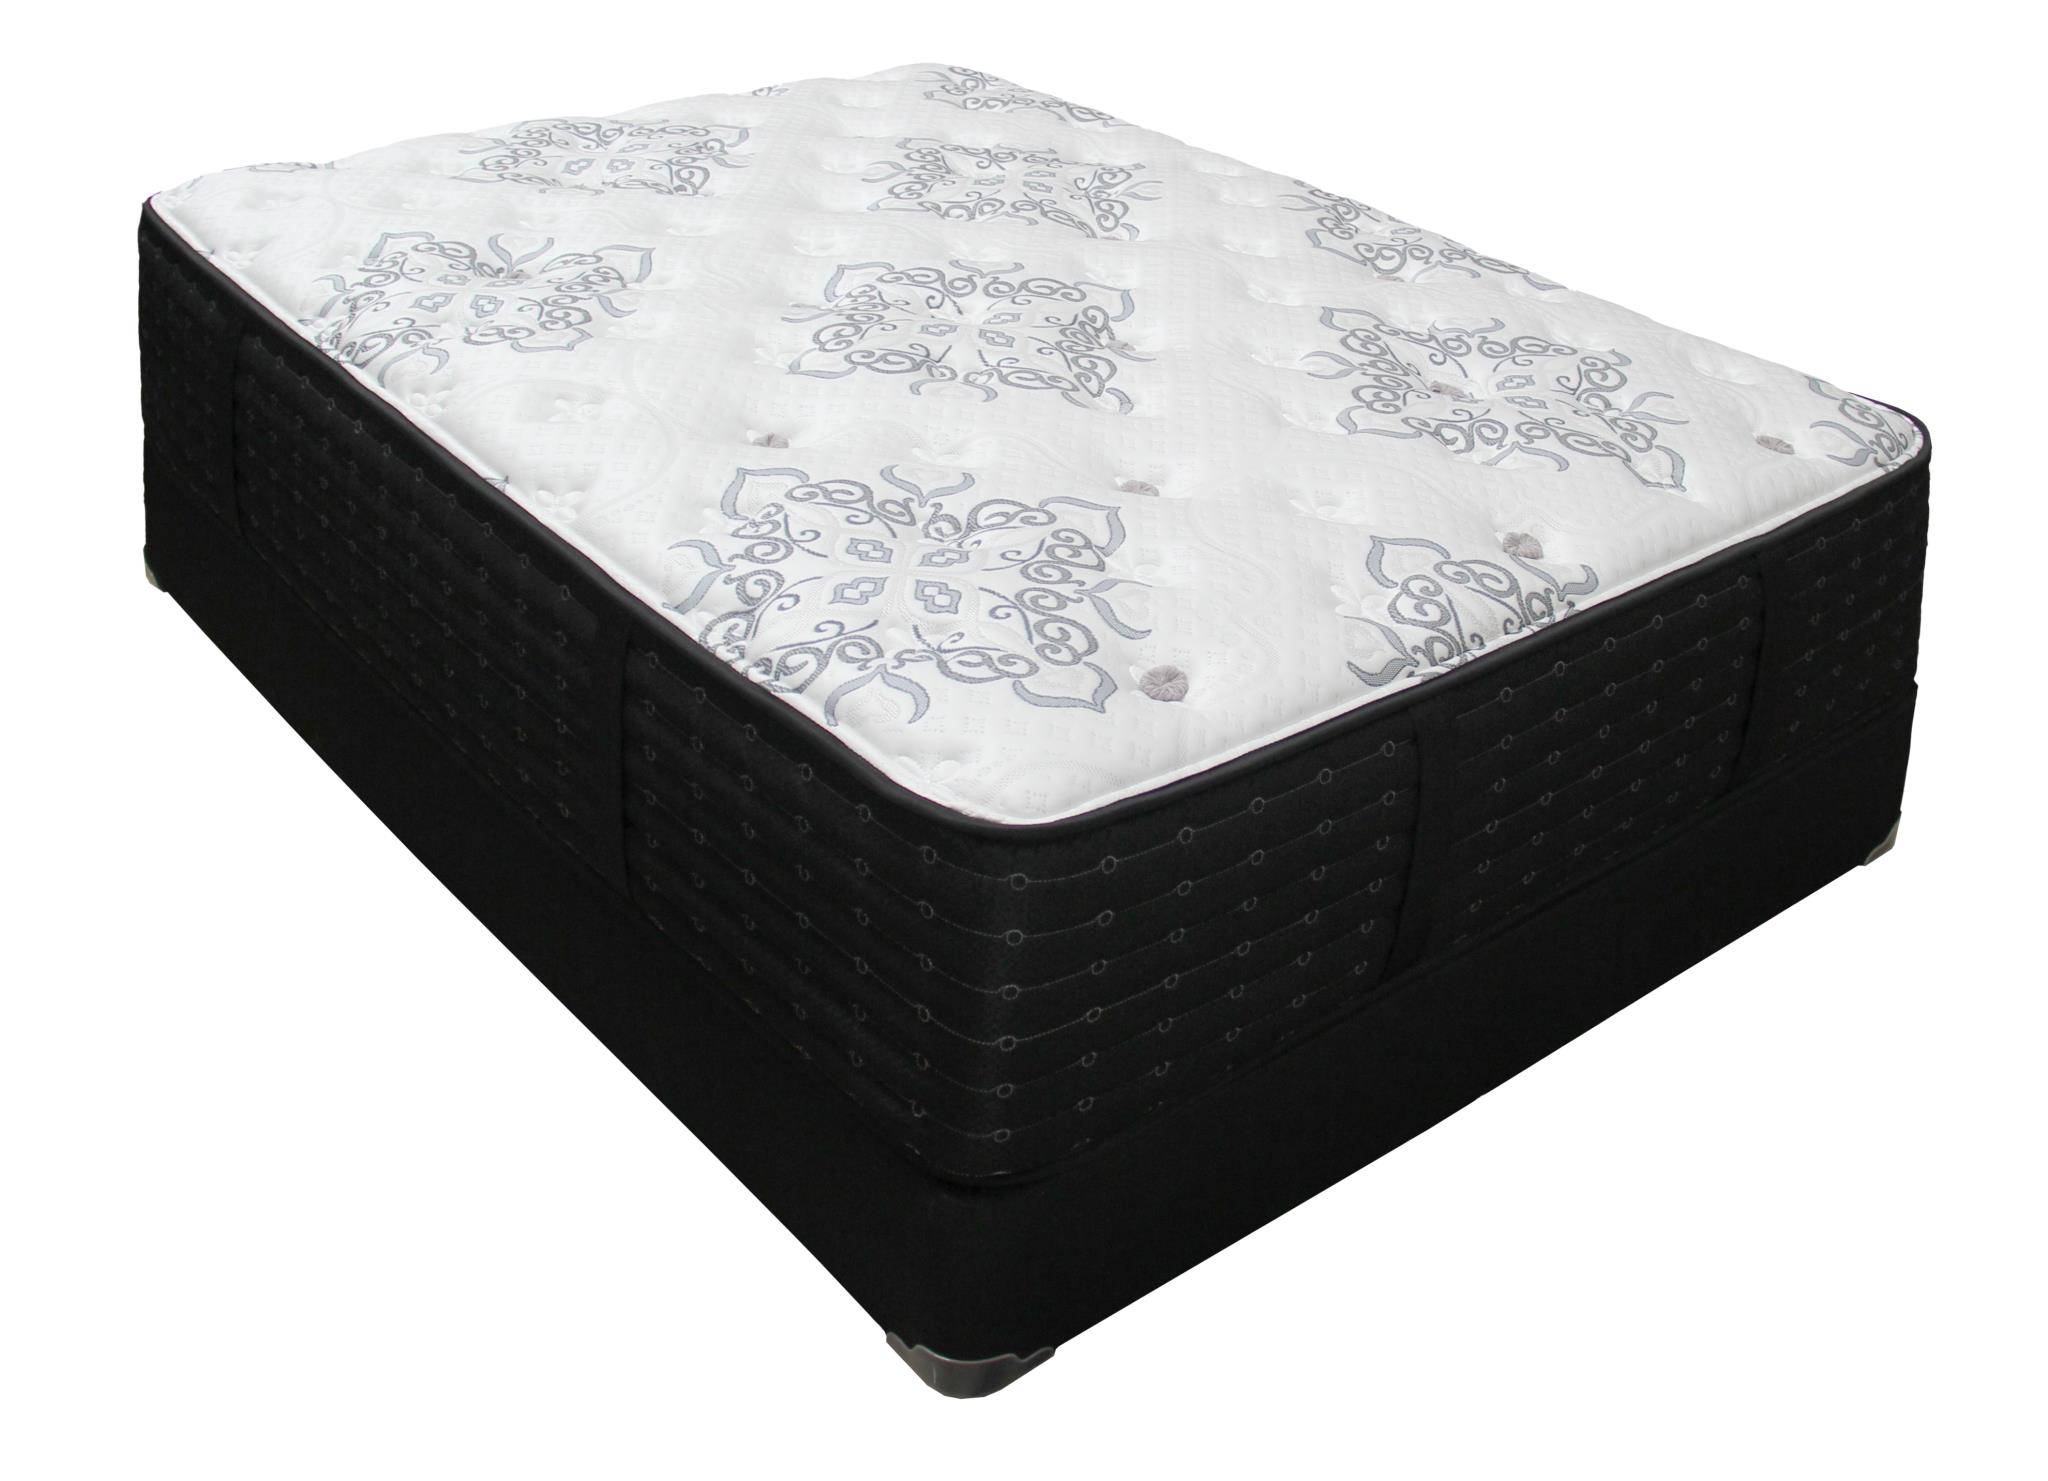 sleeptronic queen mattress price